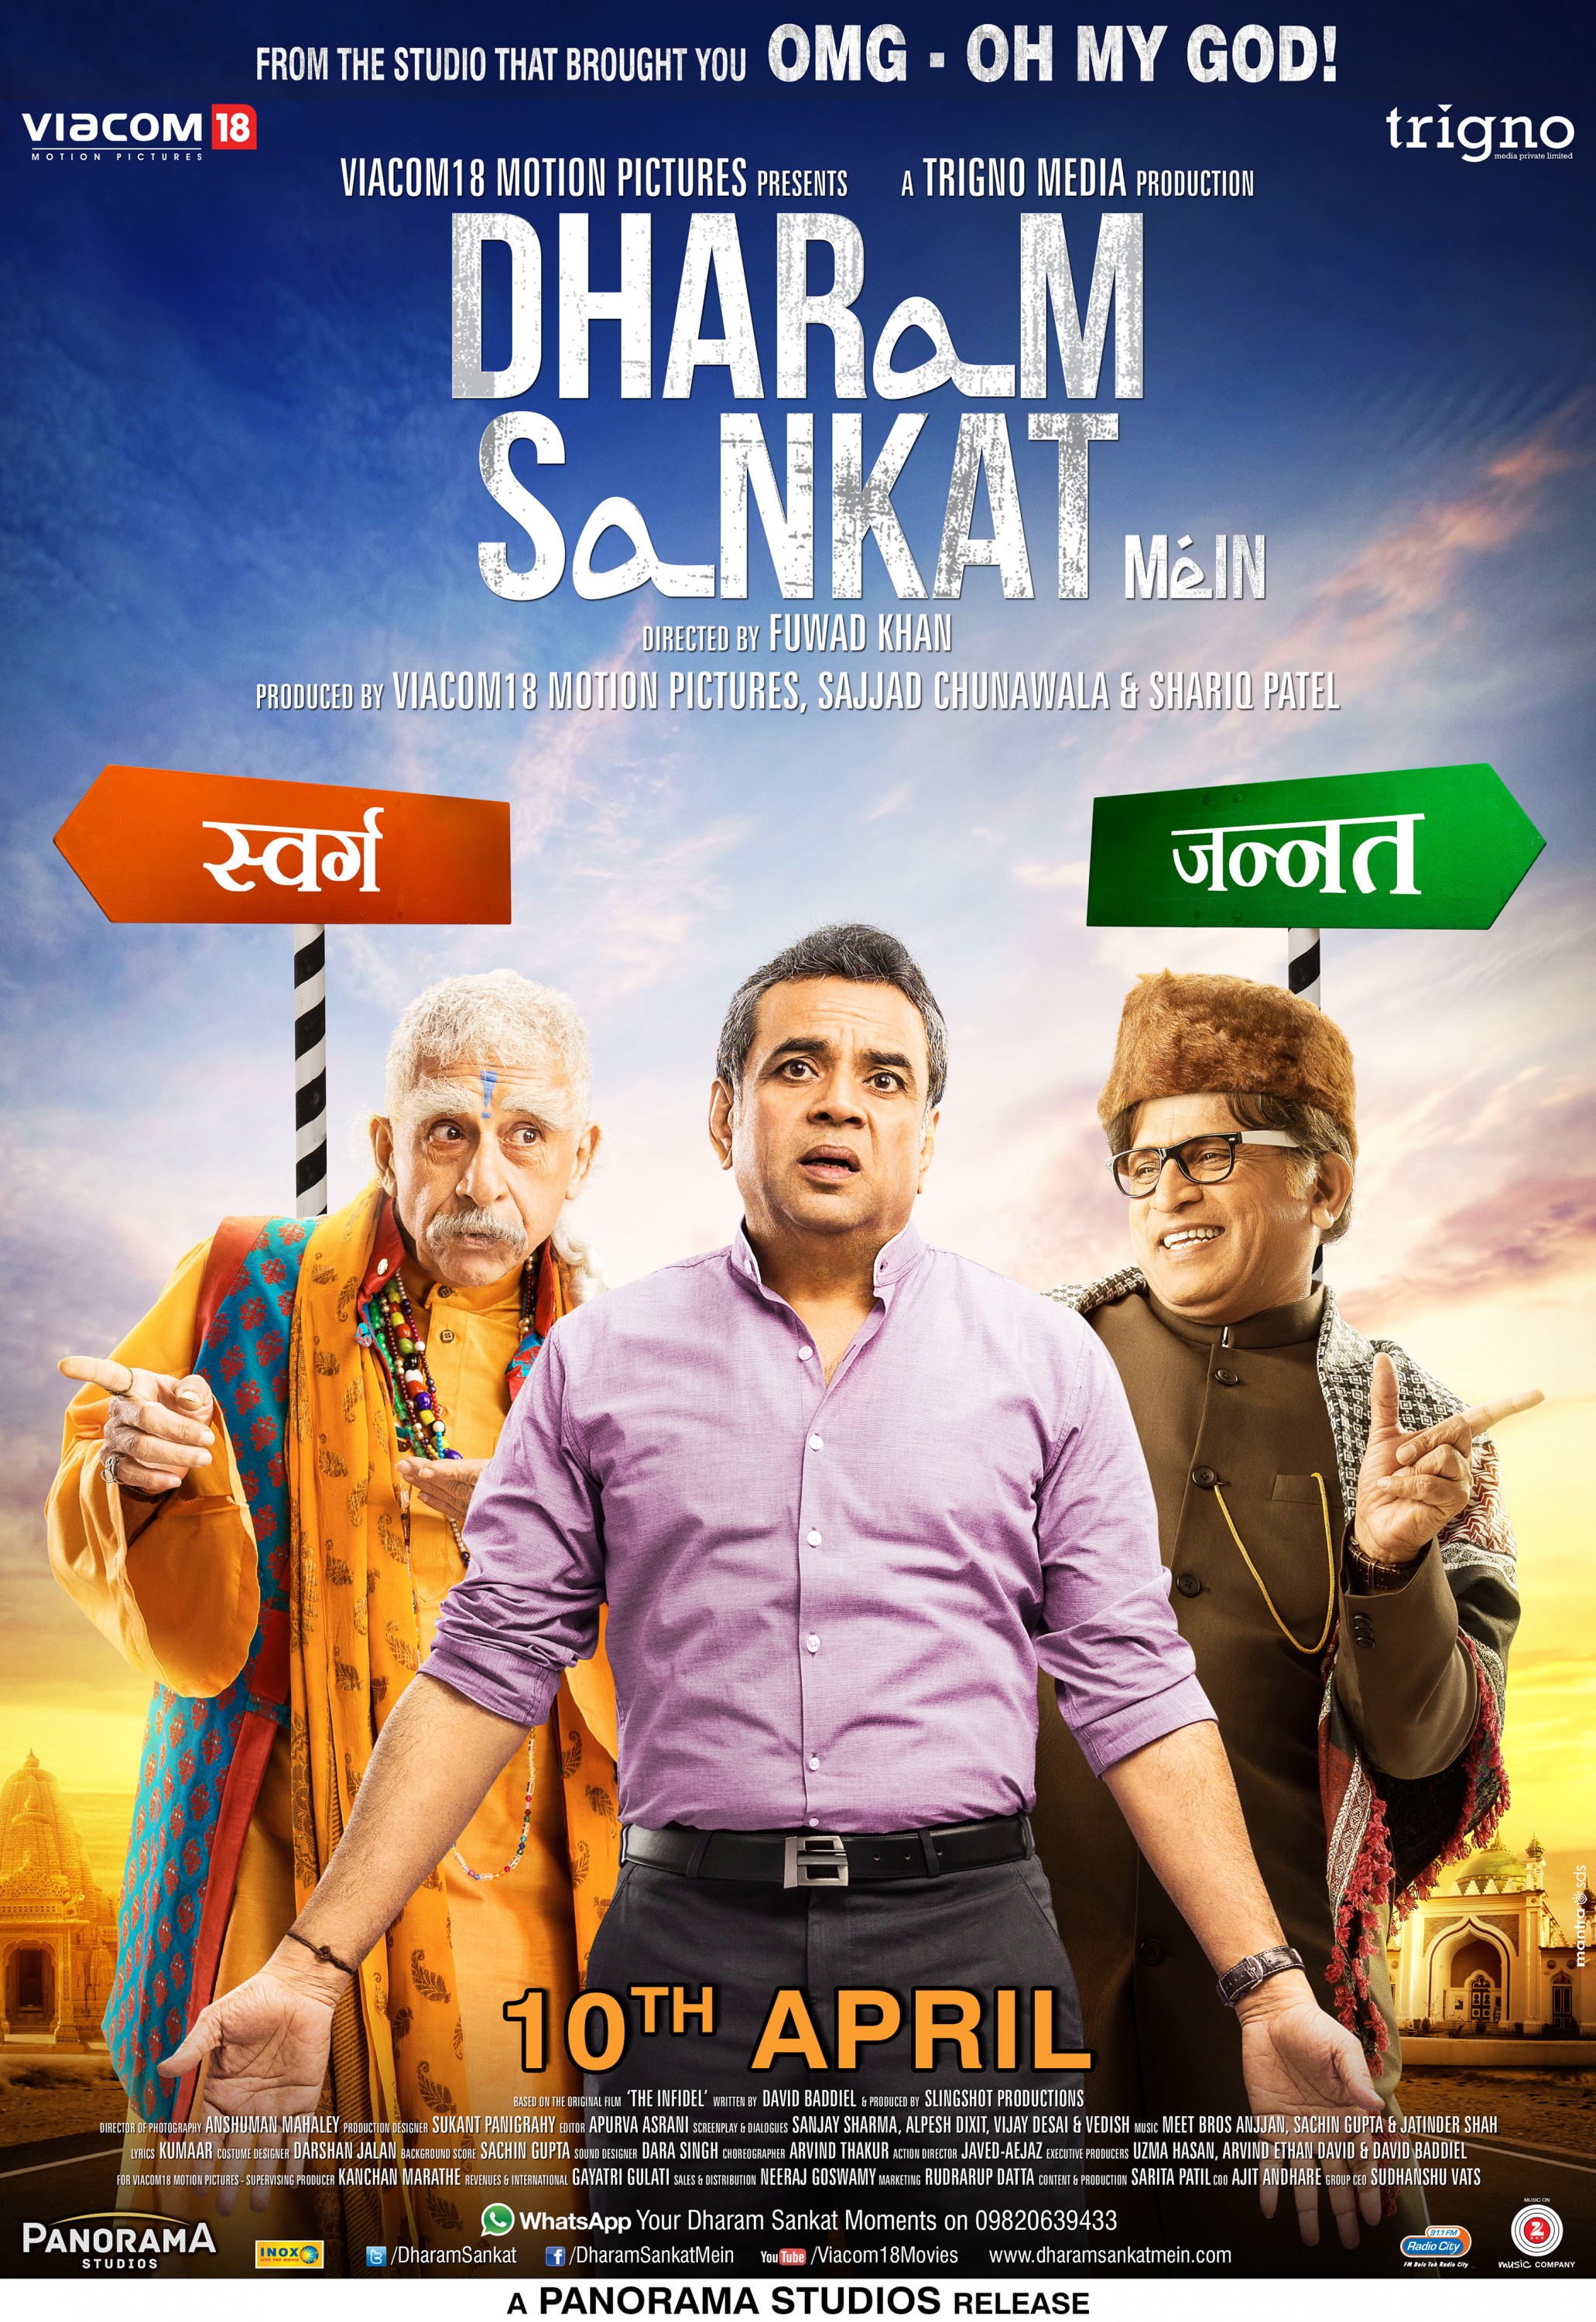 Mega Sized Movie Poster Image for Dharam Sankat Mein 